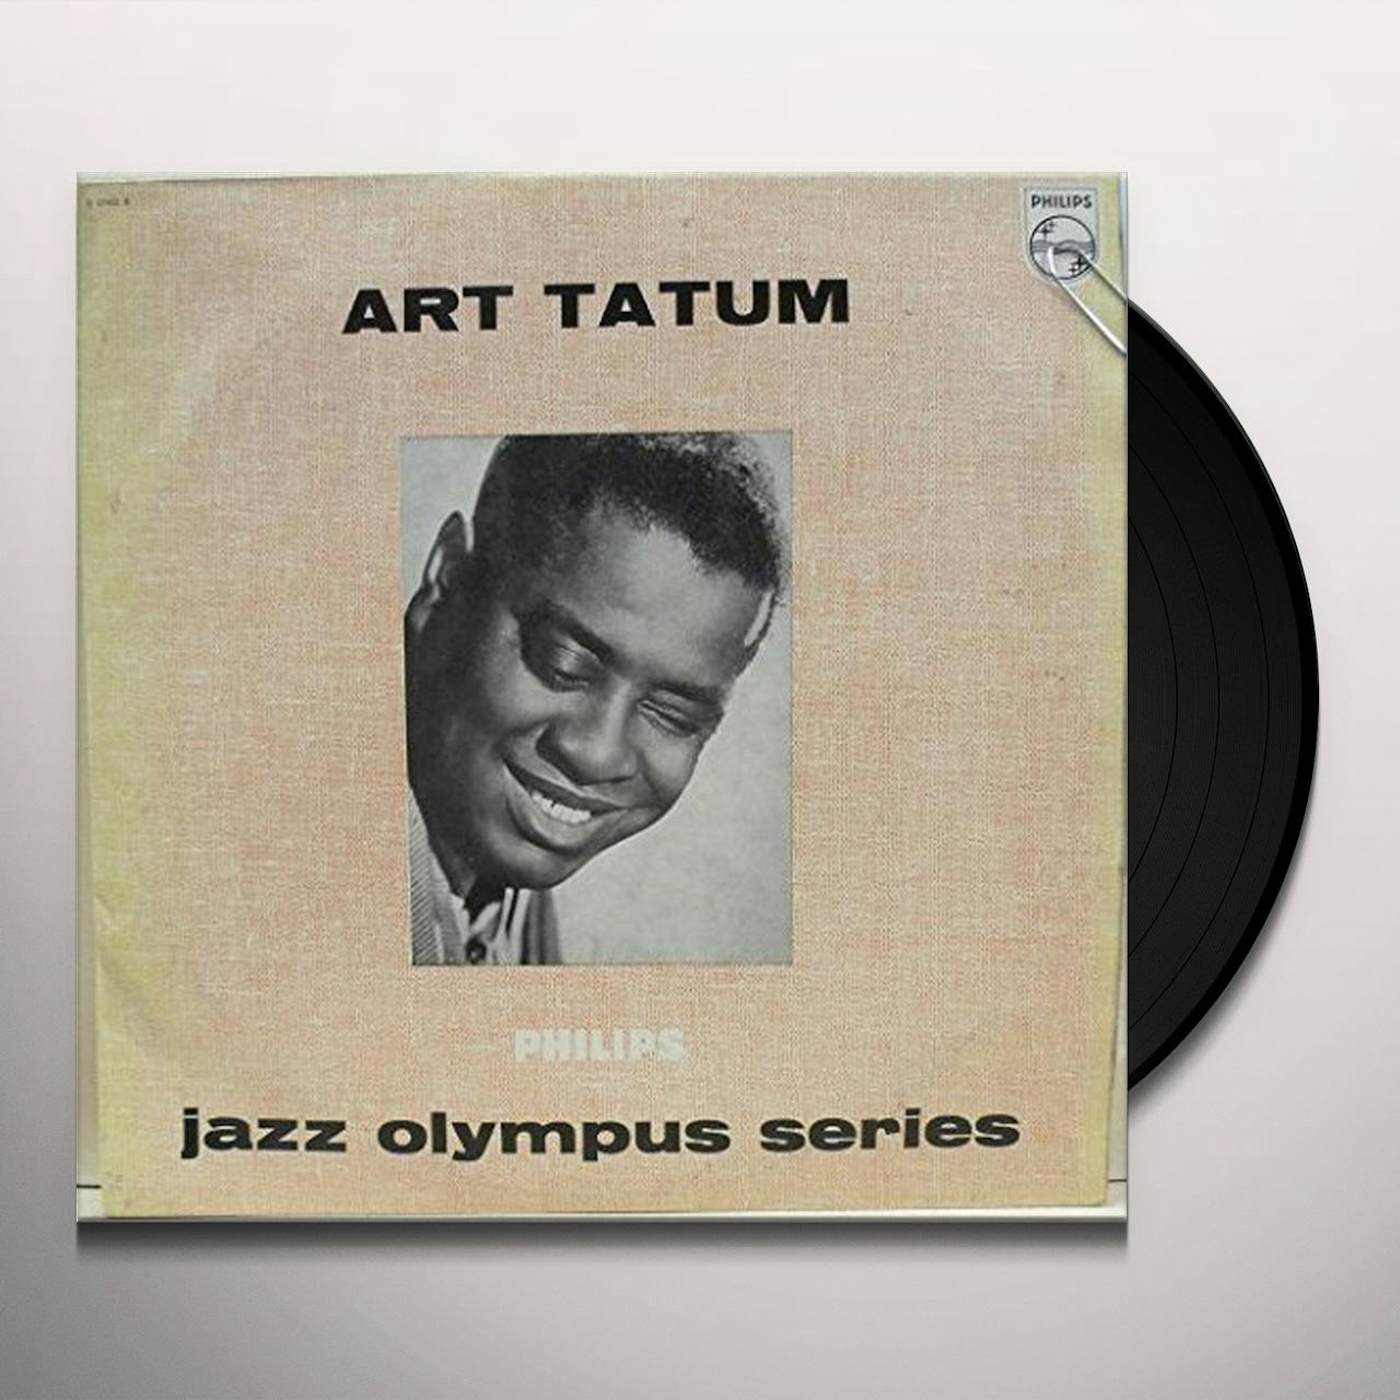 Art Tatum FROM GENE NORMAN'S JUST JAZZ Vinyl Record